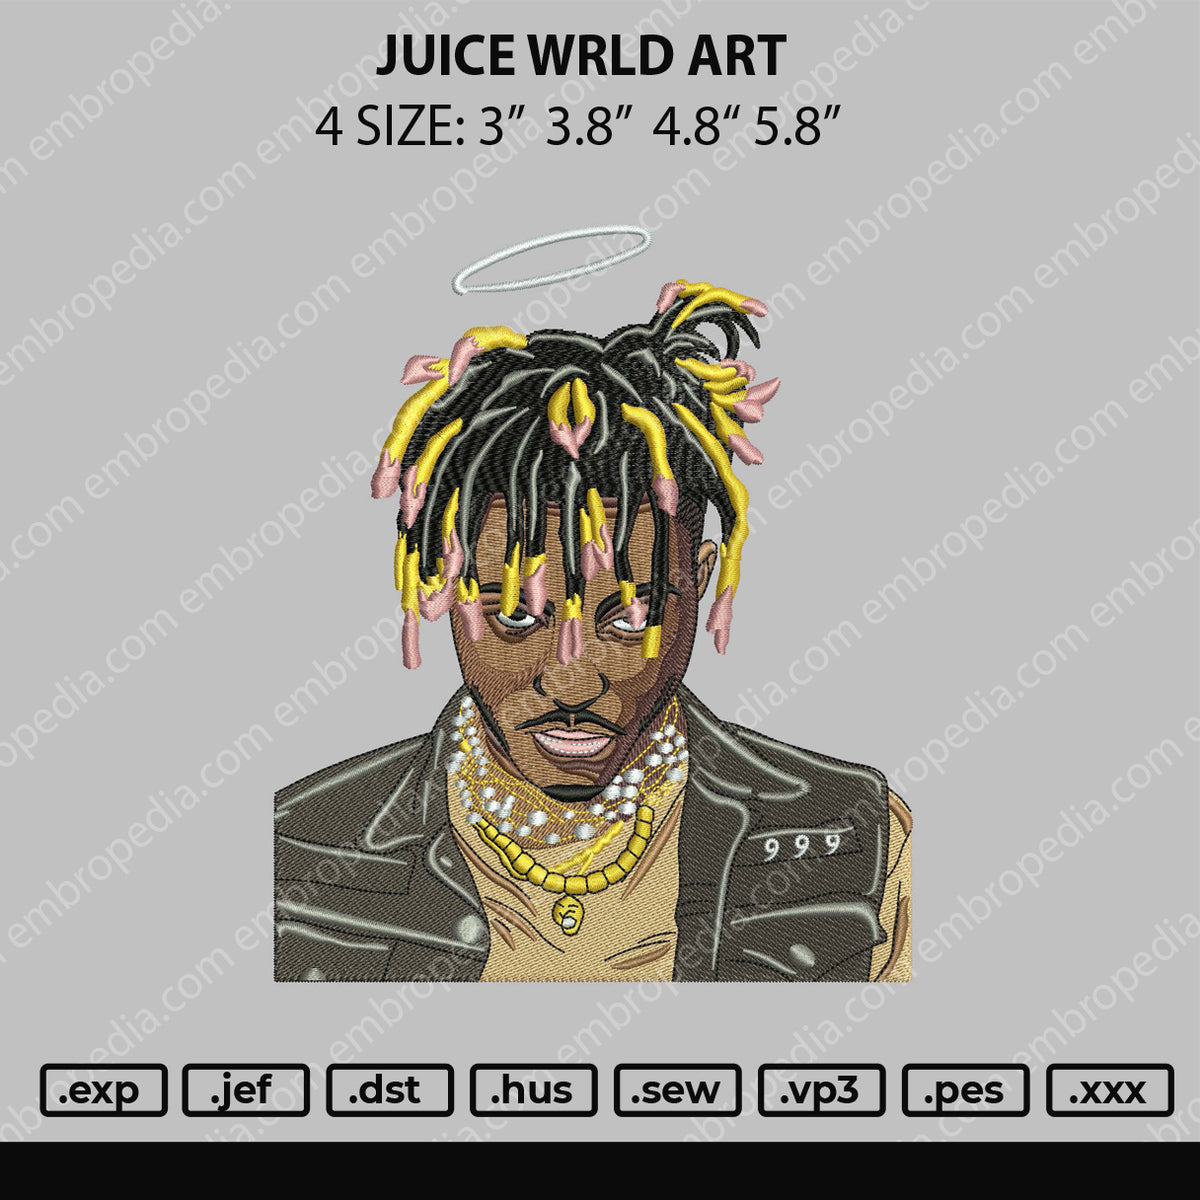 Juice Wrld Art 